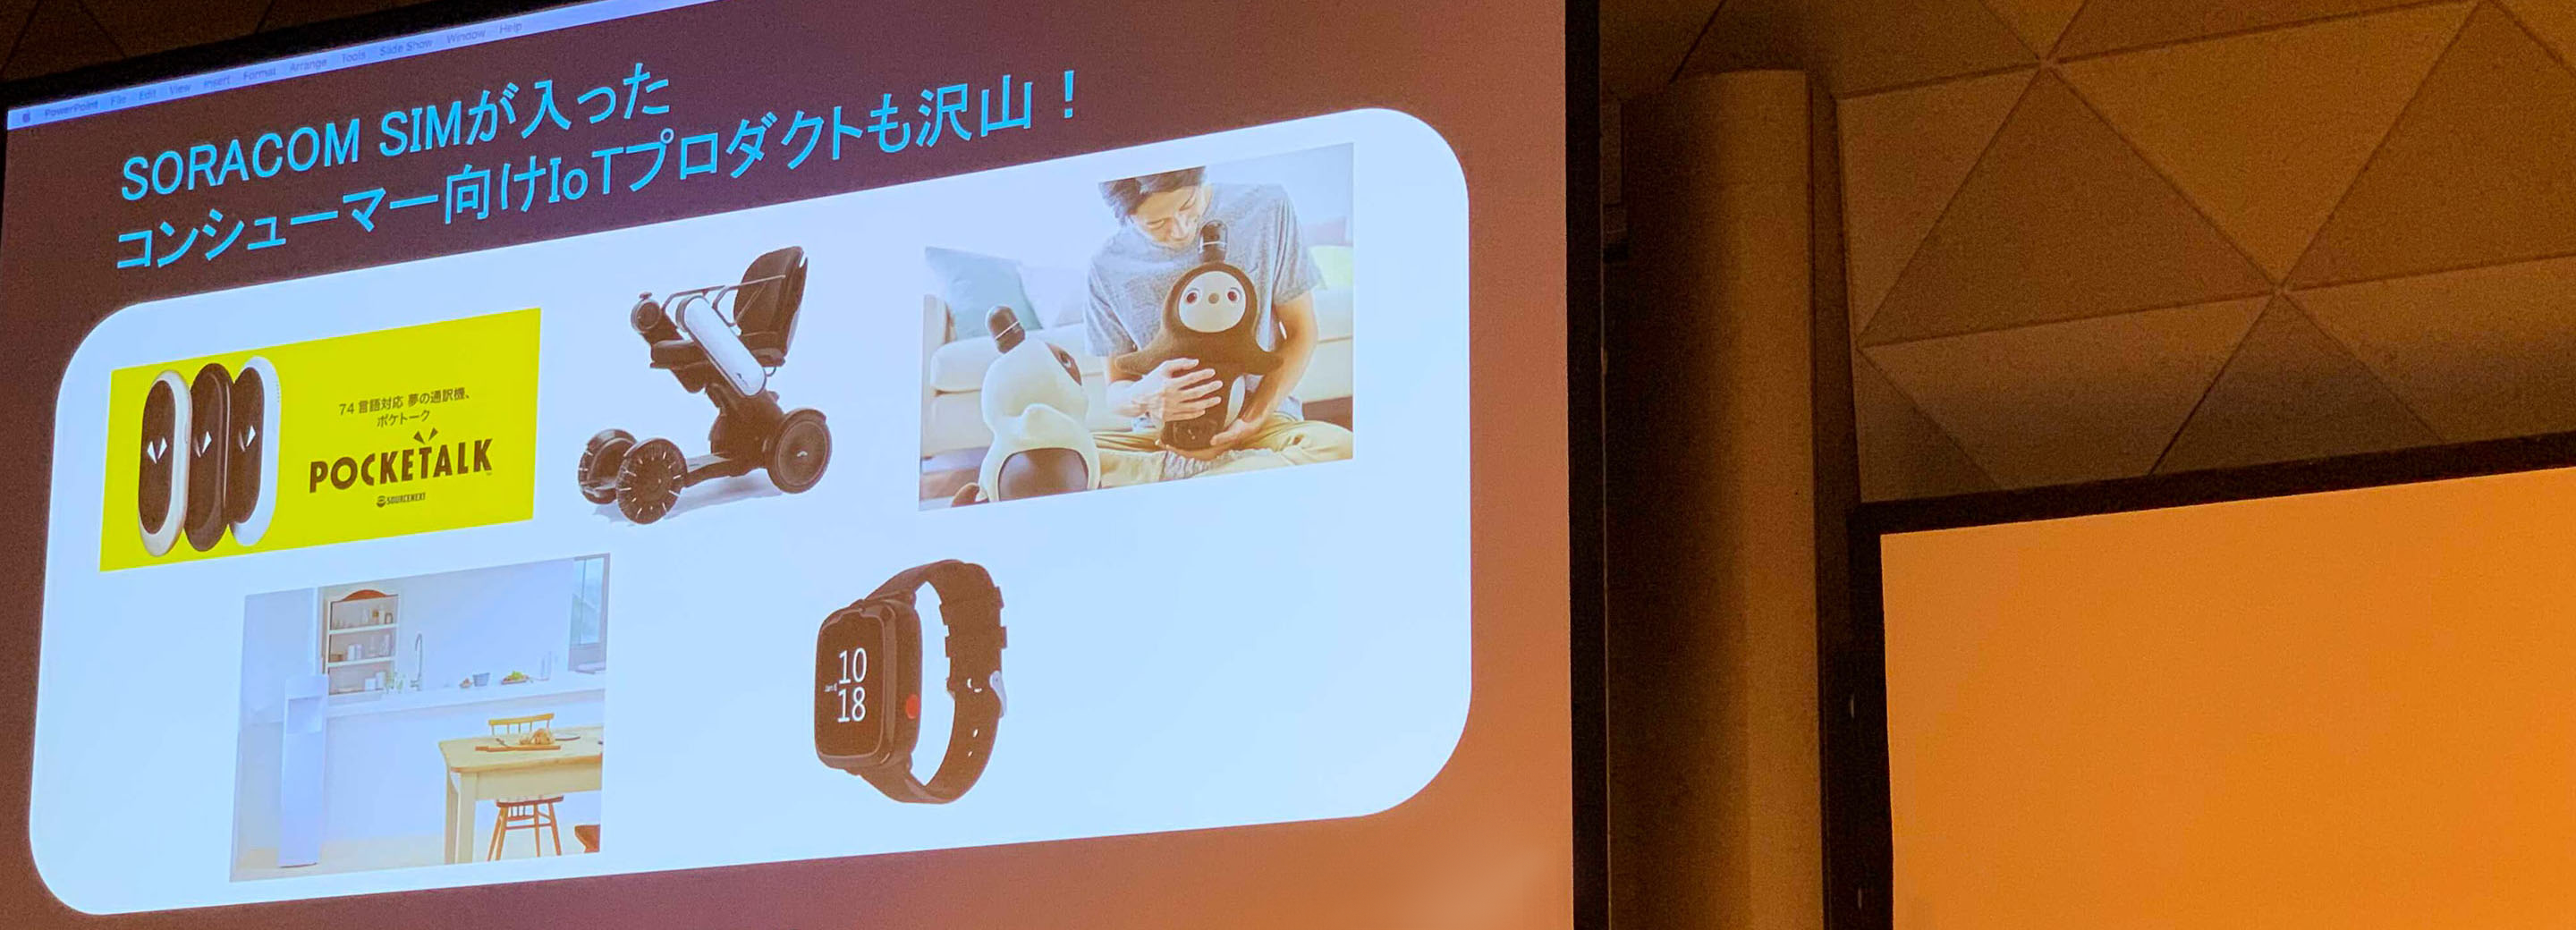 Japan IT Week基調講演でソラコムが訴えた 「IoTテクノロジーの民主化」